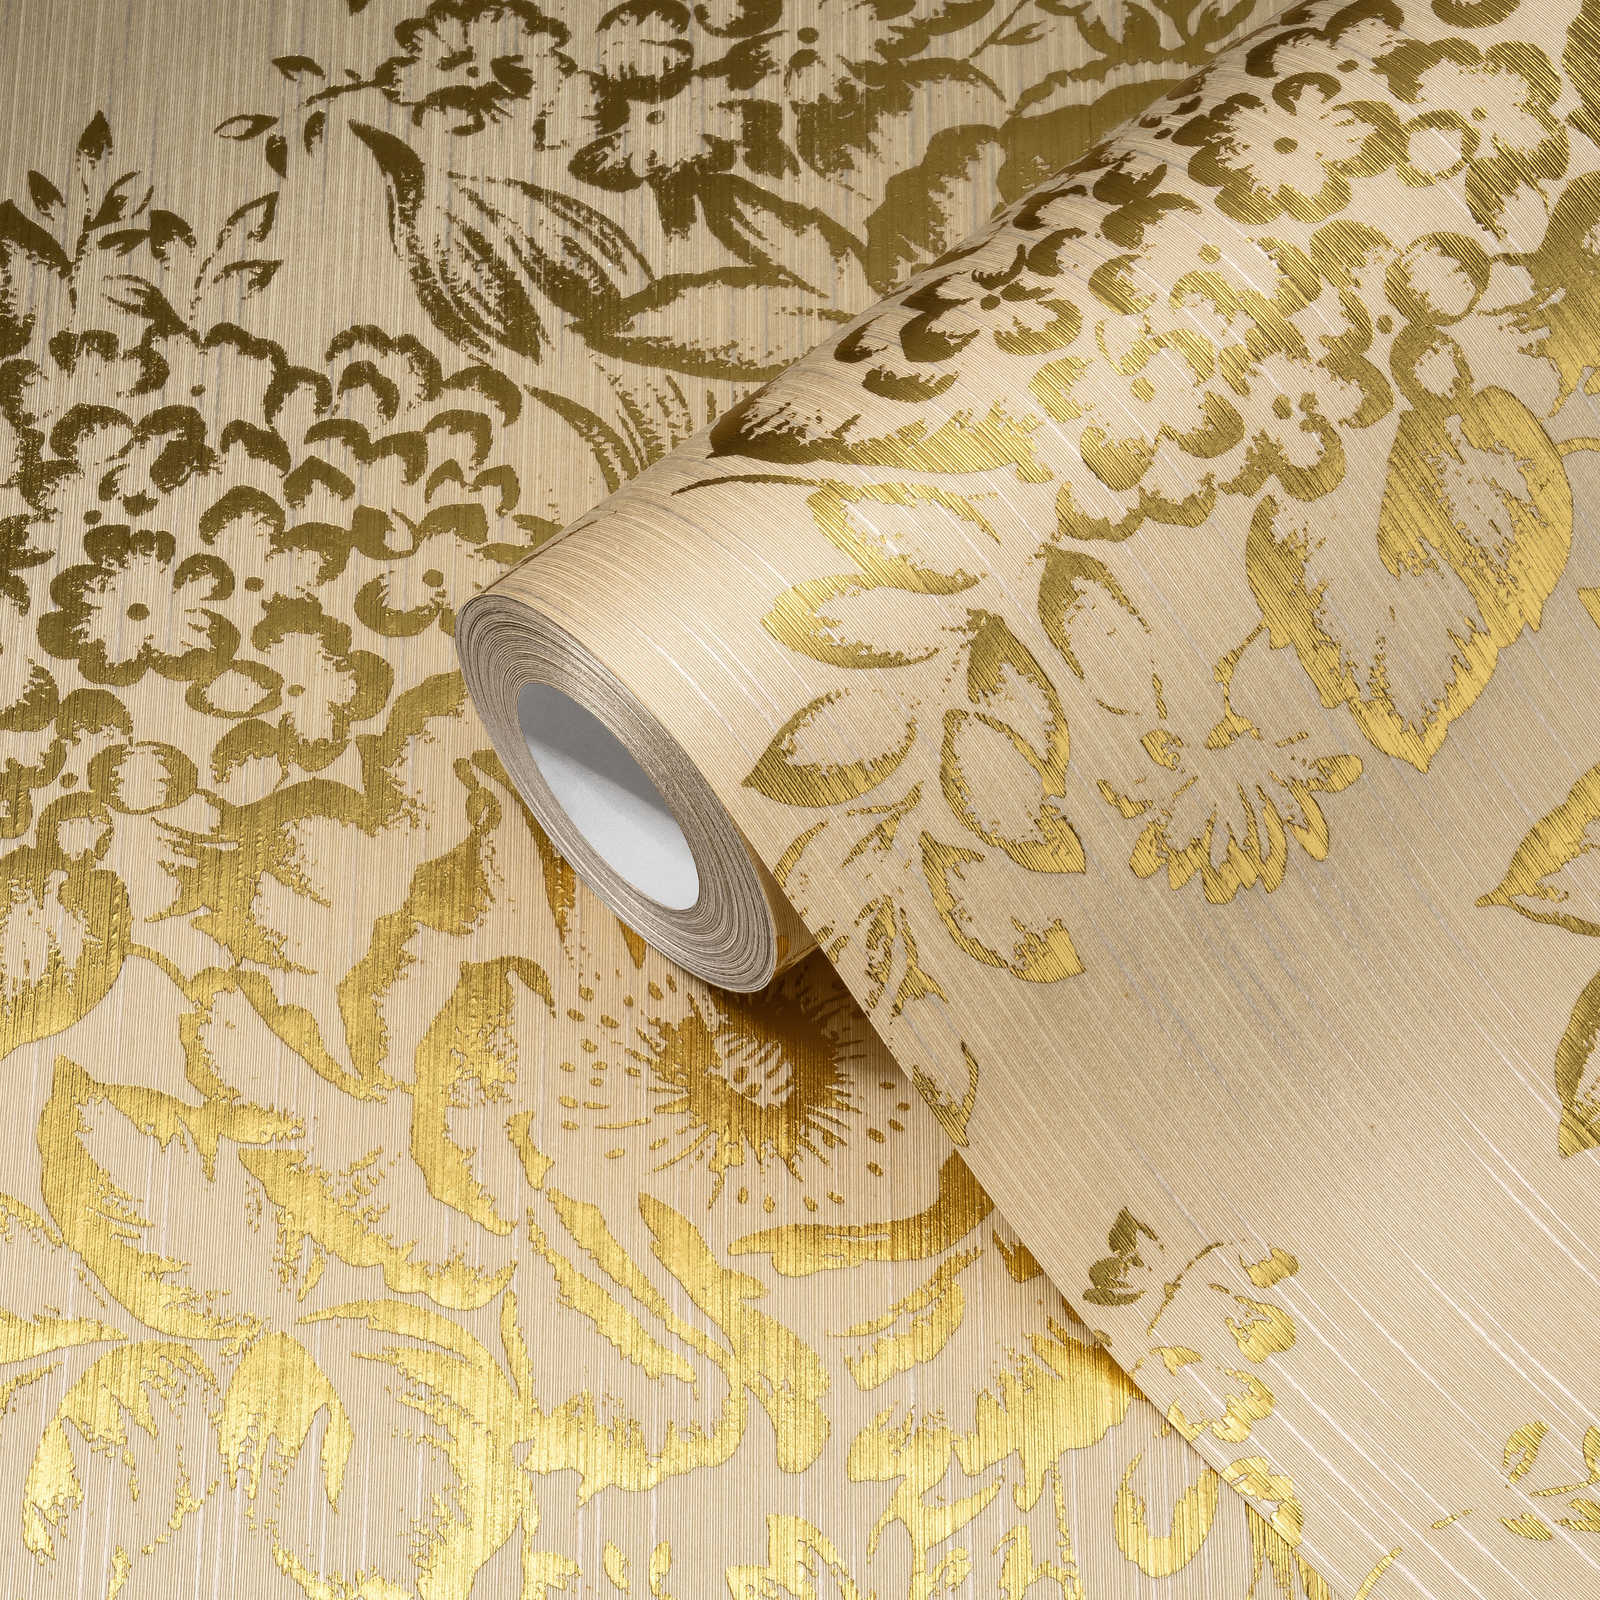             Papel pintado texturizado con motivos florales dorados - oro, crema
        